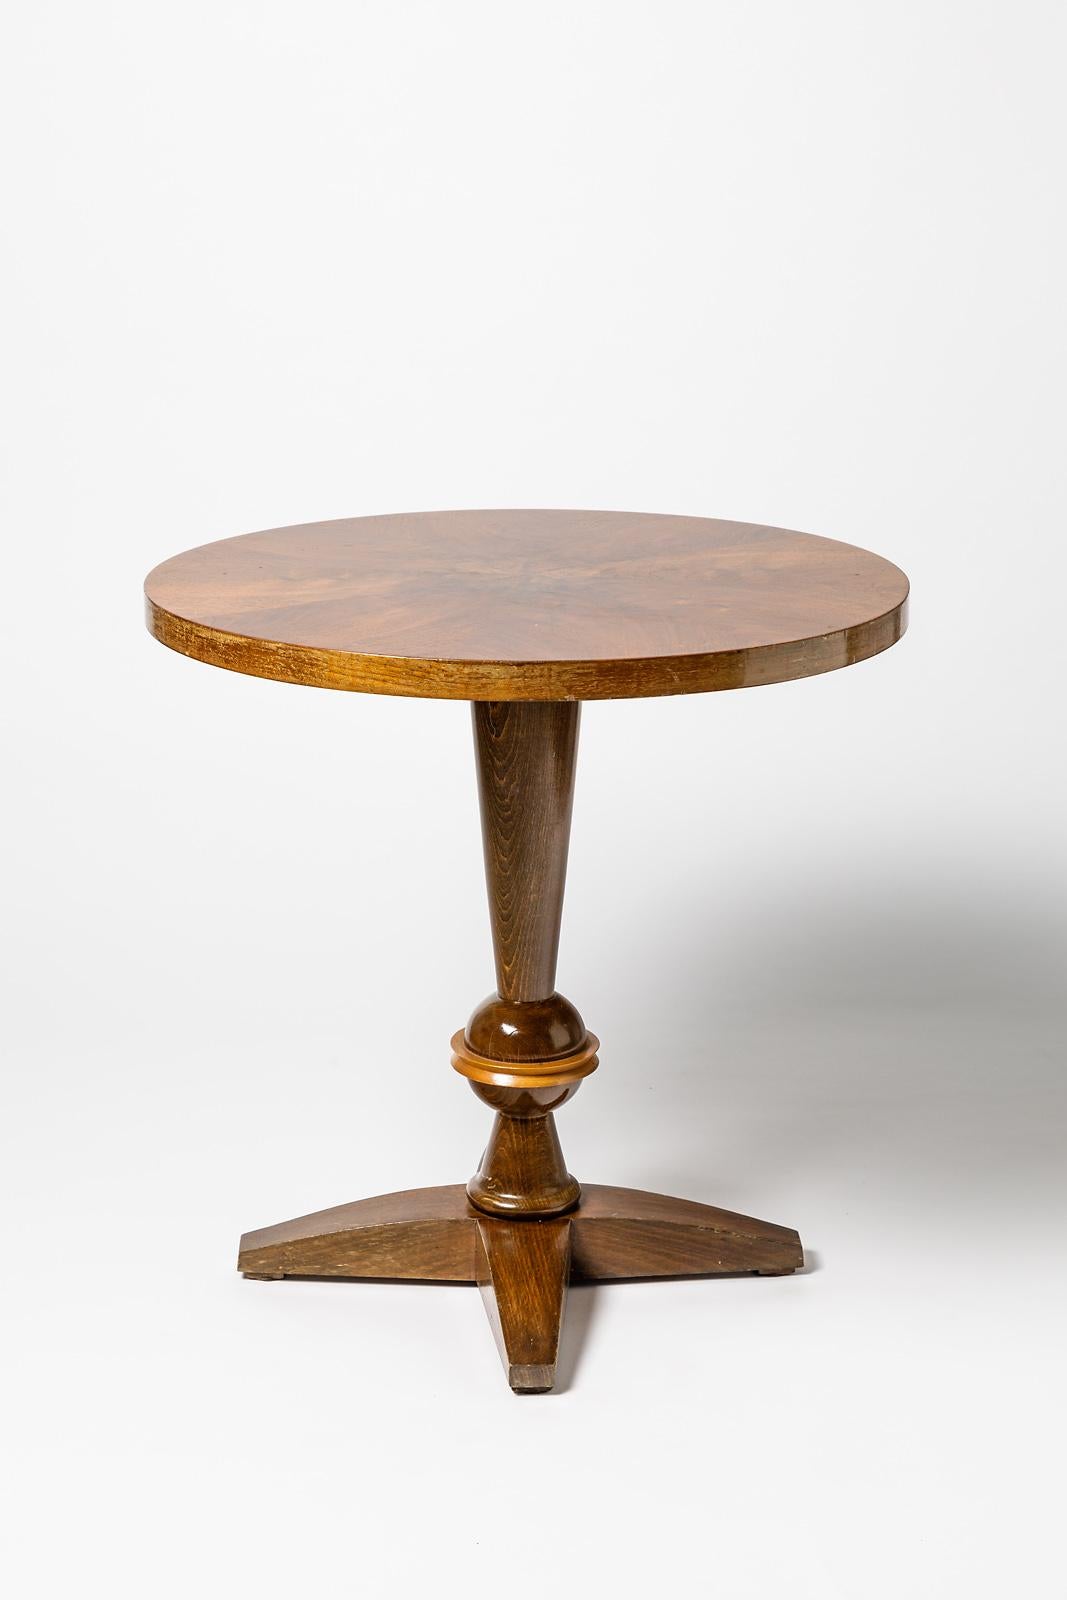 Fruitwood French Brown Wood Art Deco Guéridon Table circa 1930 Coffee or Sofa Table